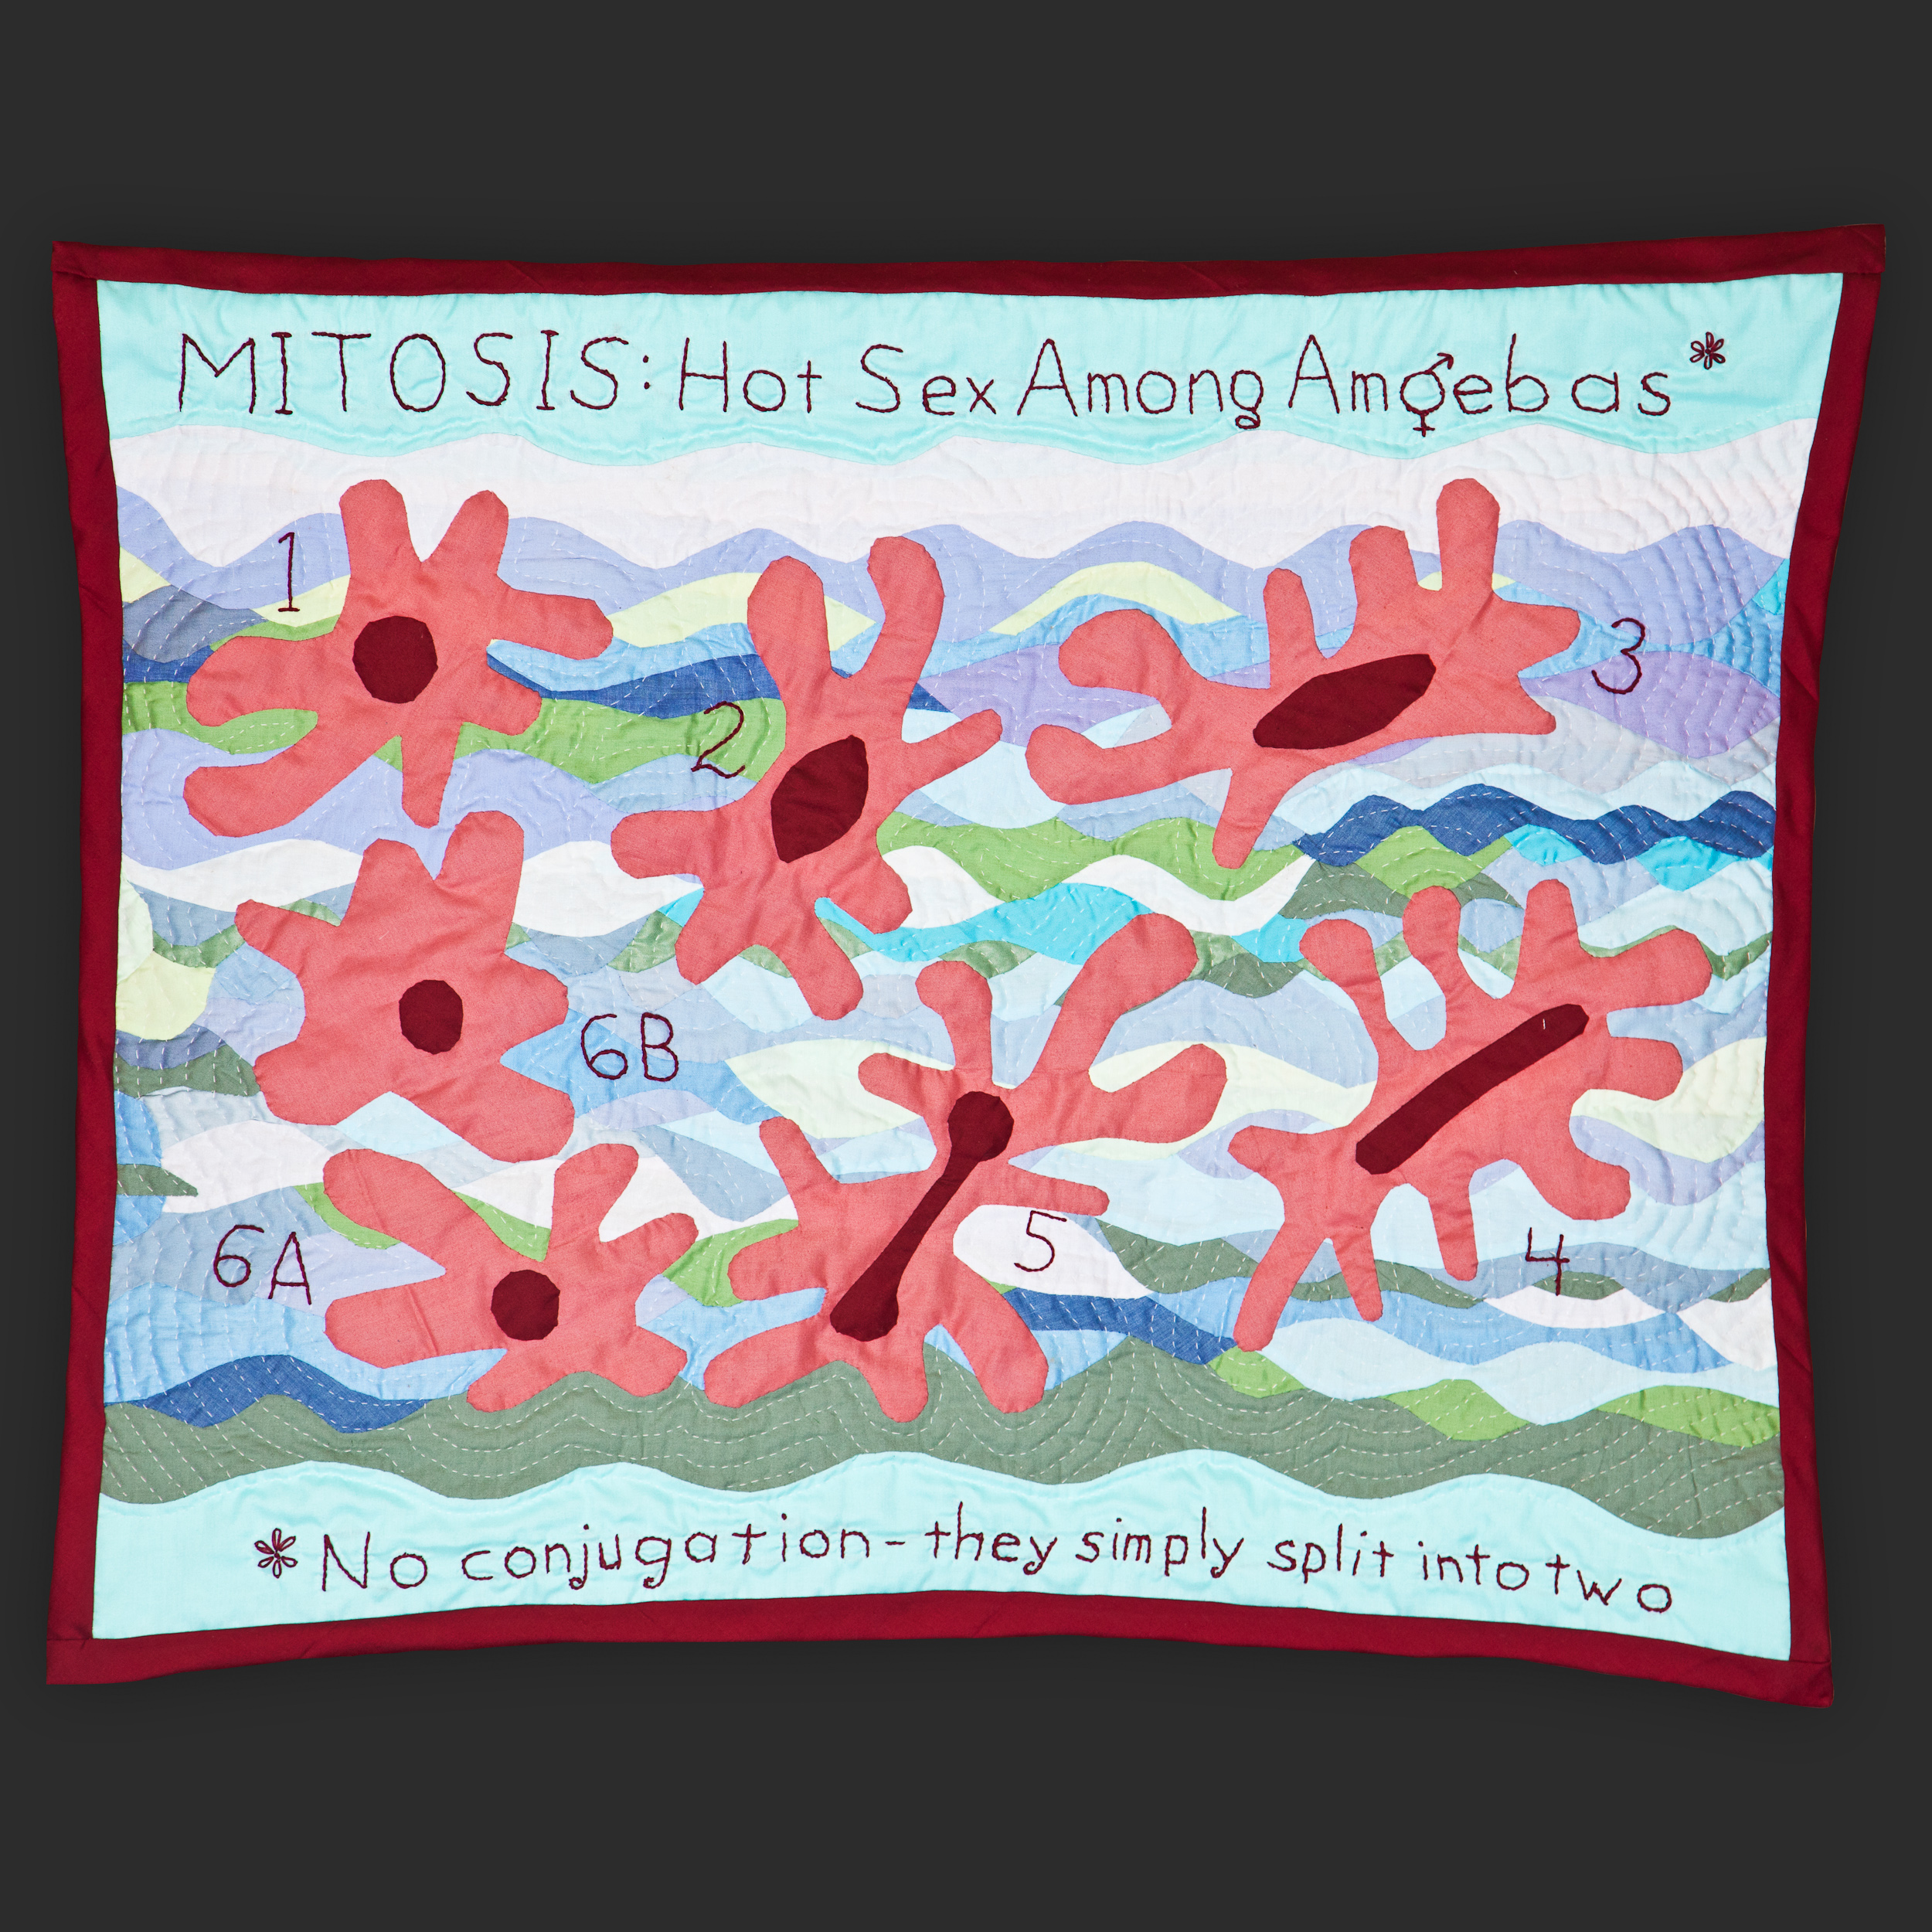 Mitosis: Hot Sex Among Amoebas